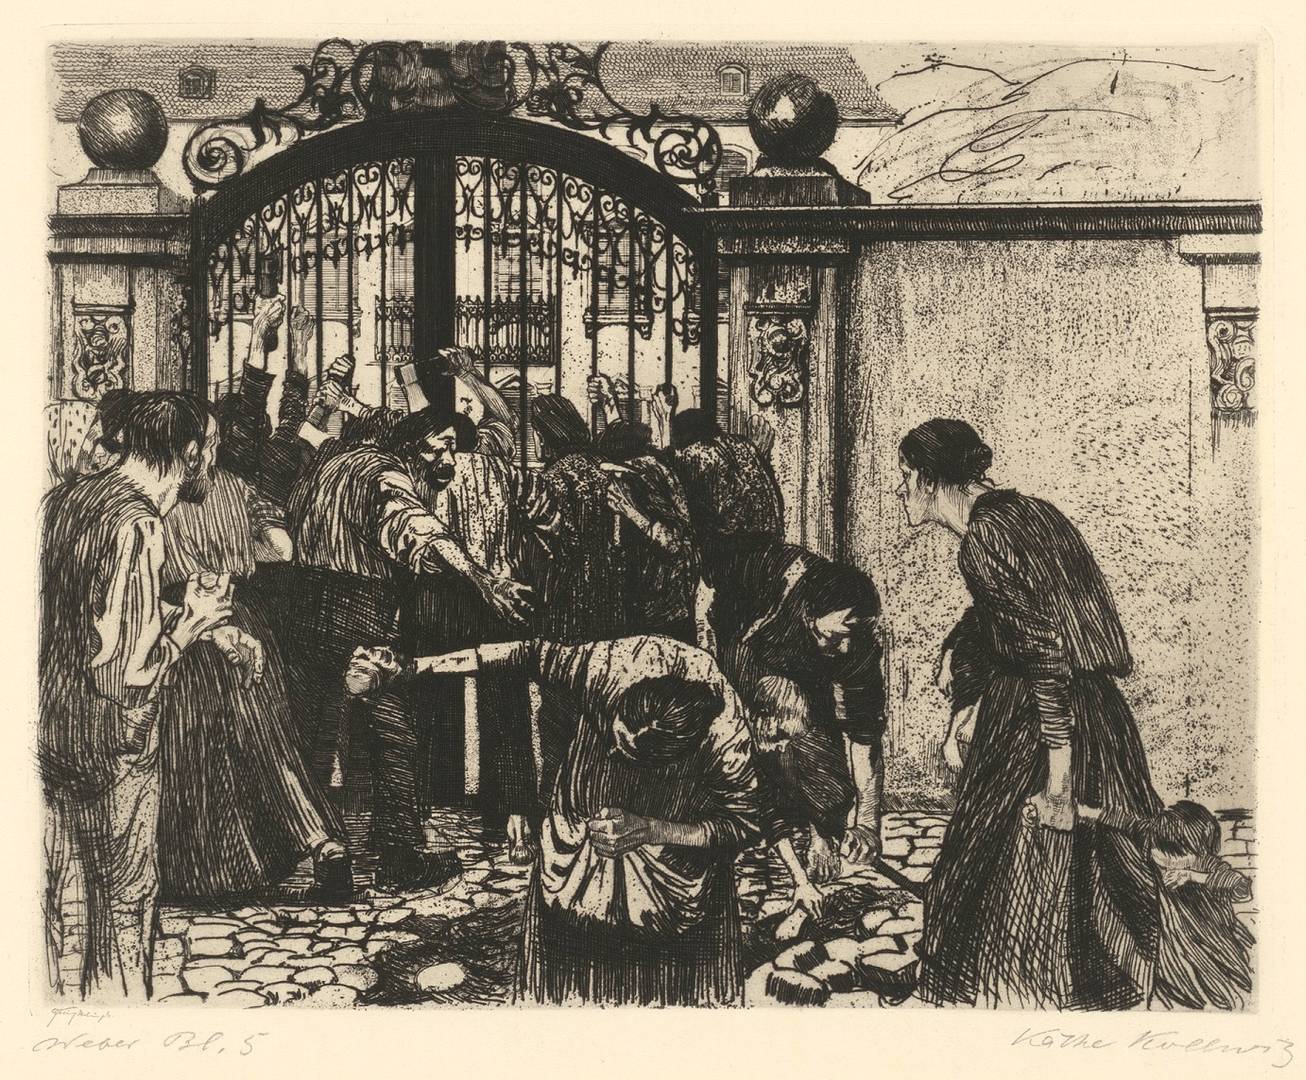 Кете Кольвиц. Штурм ворот. Офорт из цикла «Восстание ткачей». 1893-1897